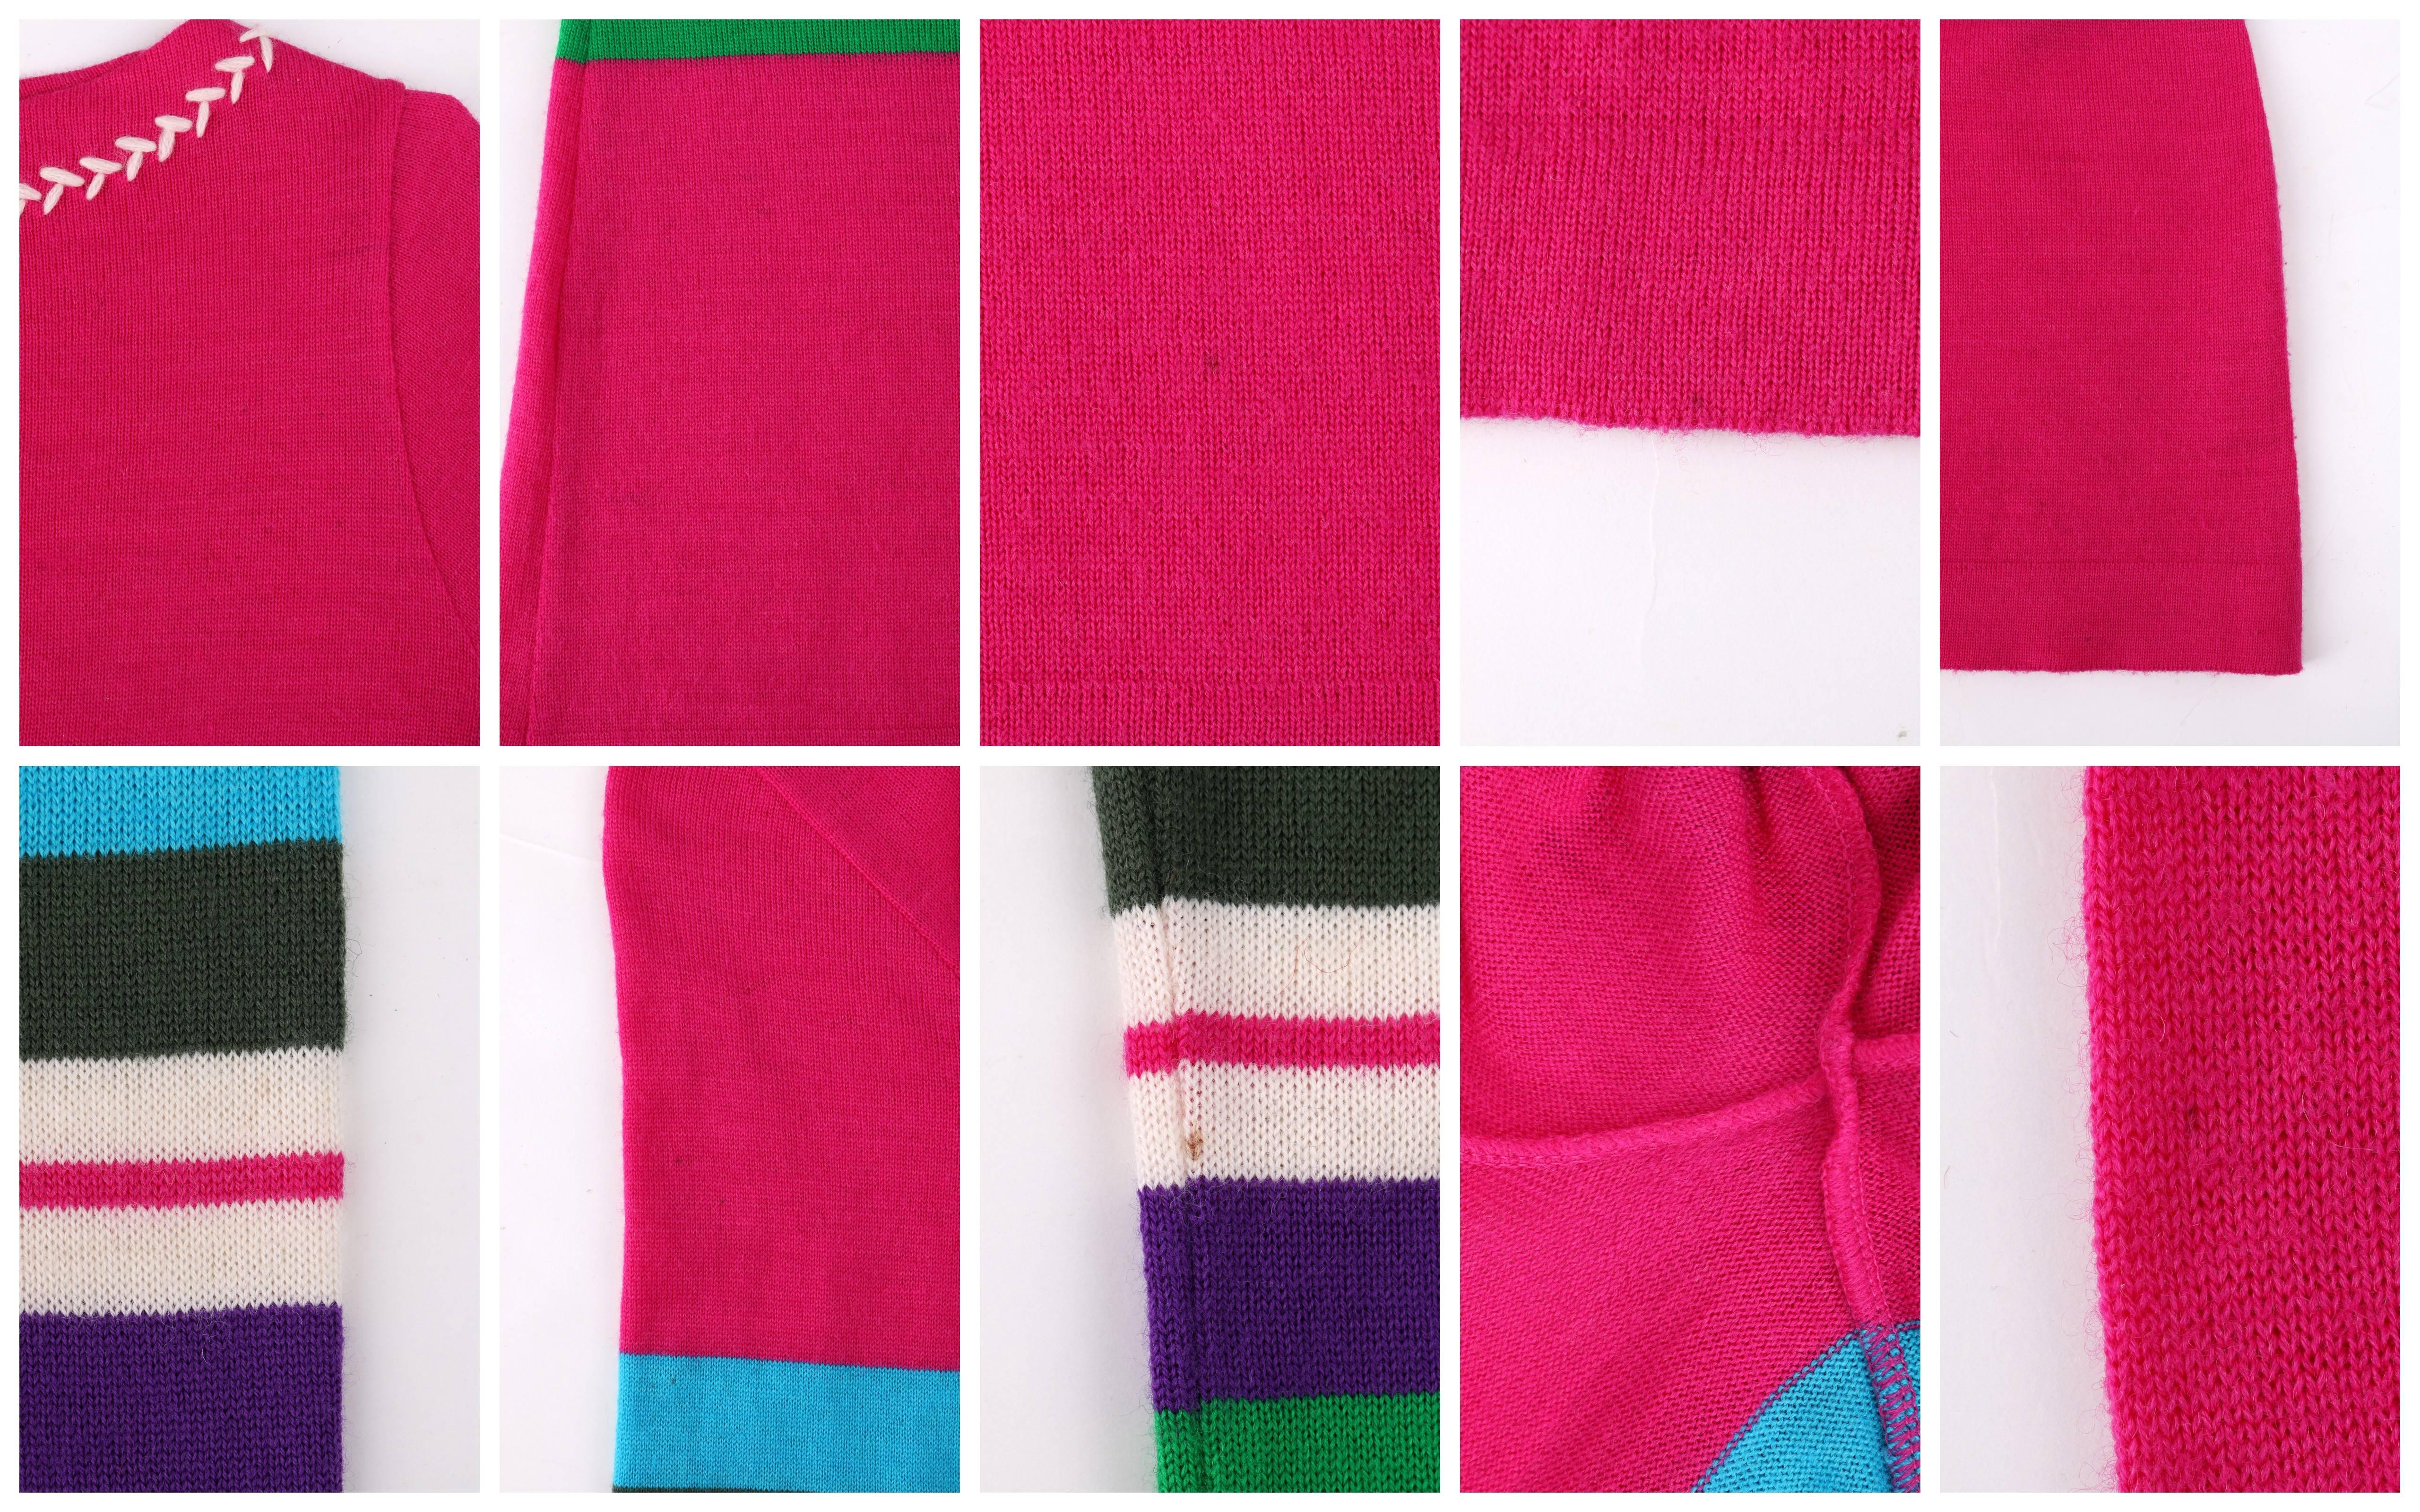 EMILIO PUCCI c.1970's Fuchsia Pink Wool Striped Knit Sweater Crewneck Top 2